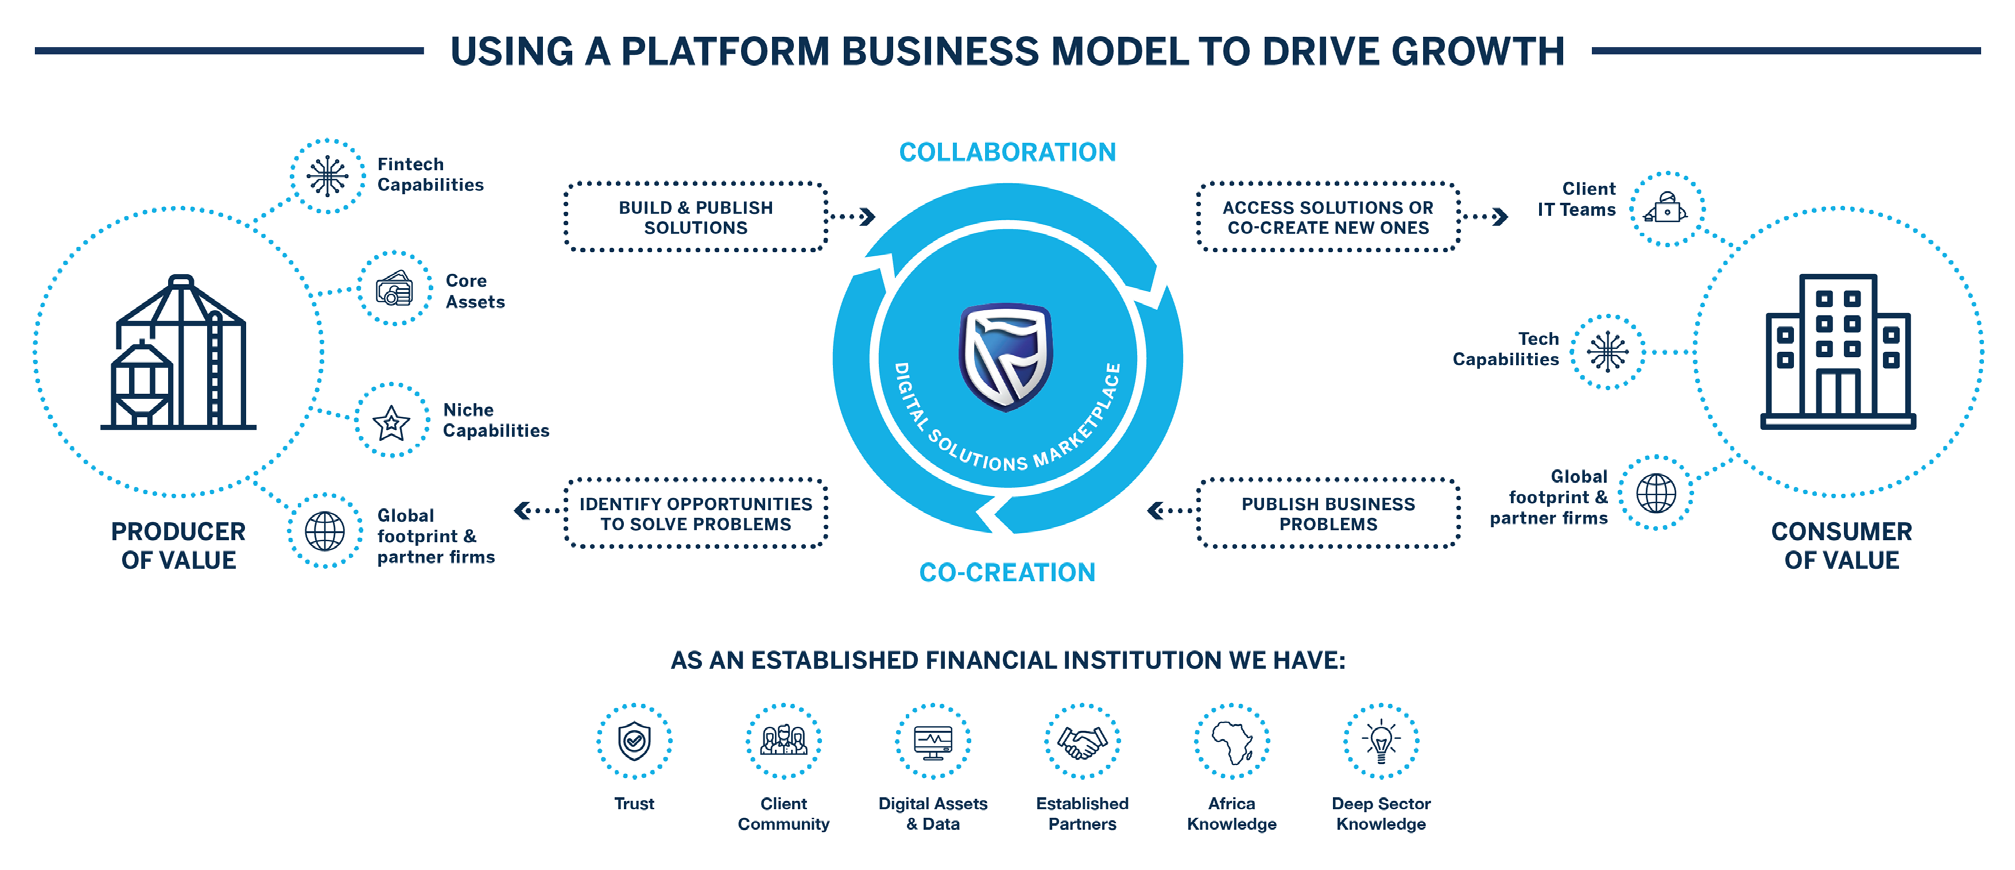 Platform Business Model for Growth